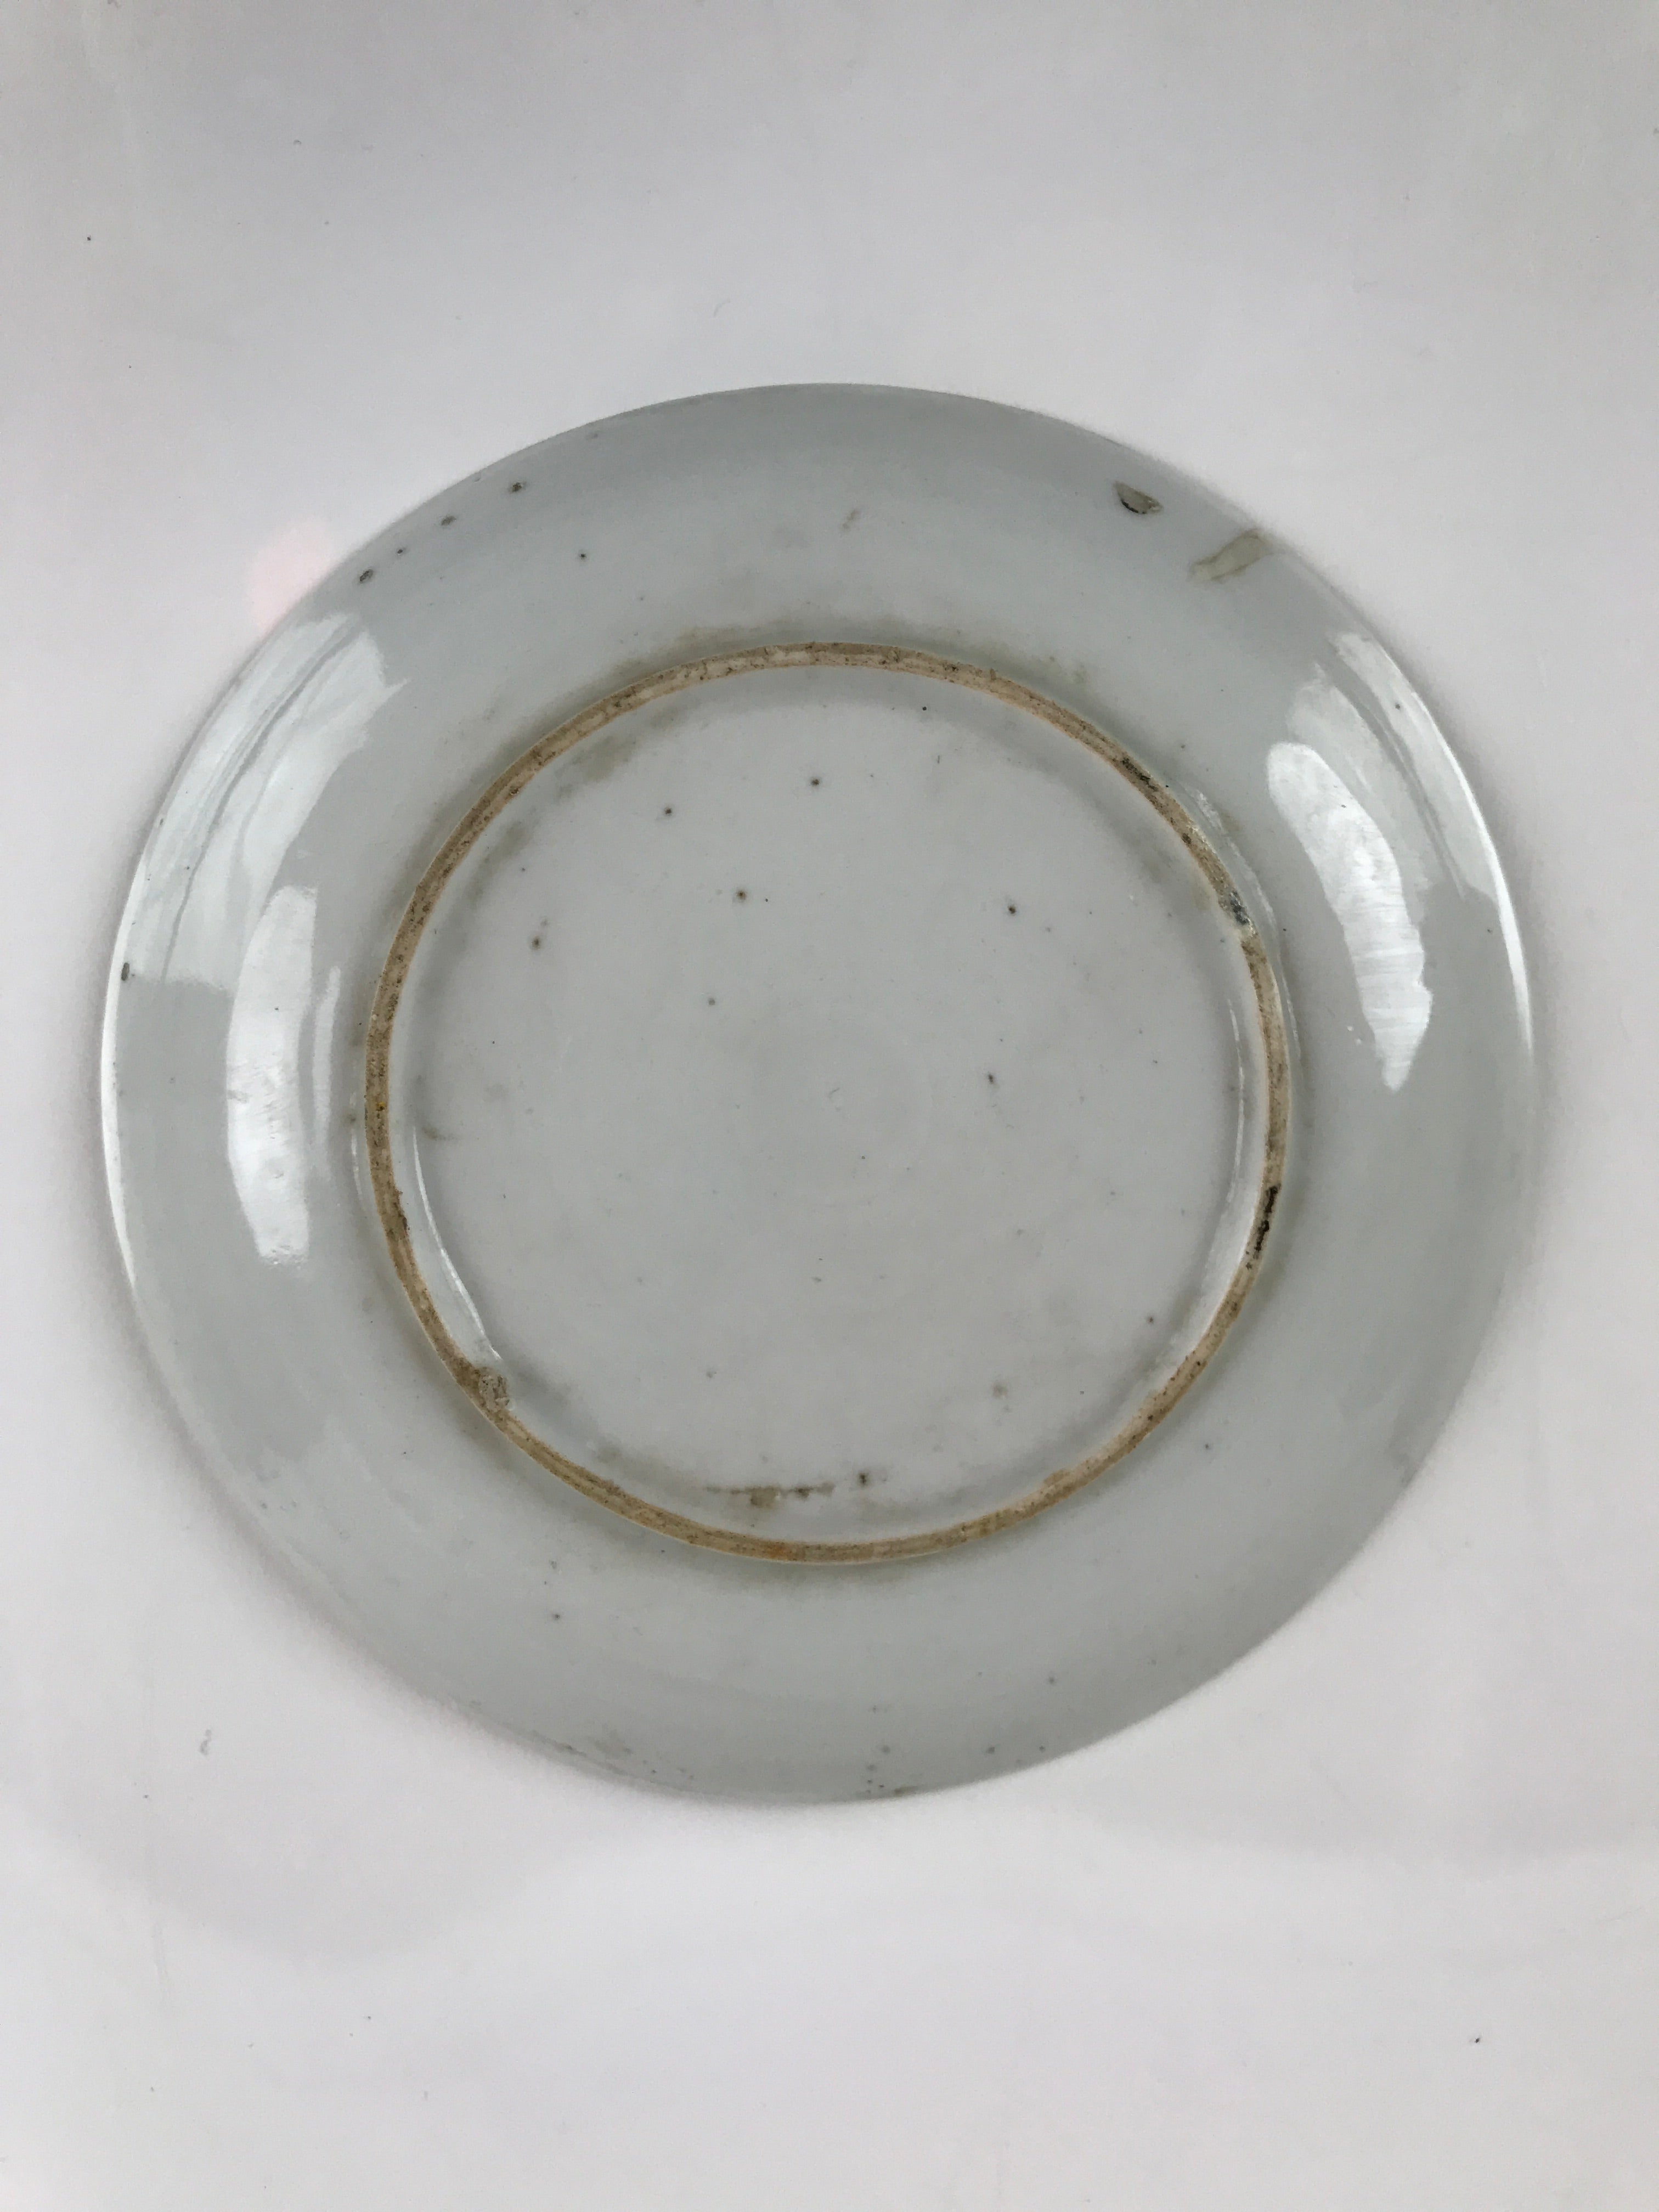 Japanese Porcelain Small Plate Kozara Vtg Plum Blossom Sun Black White PY683